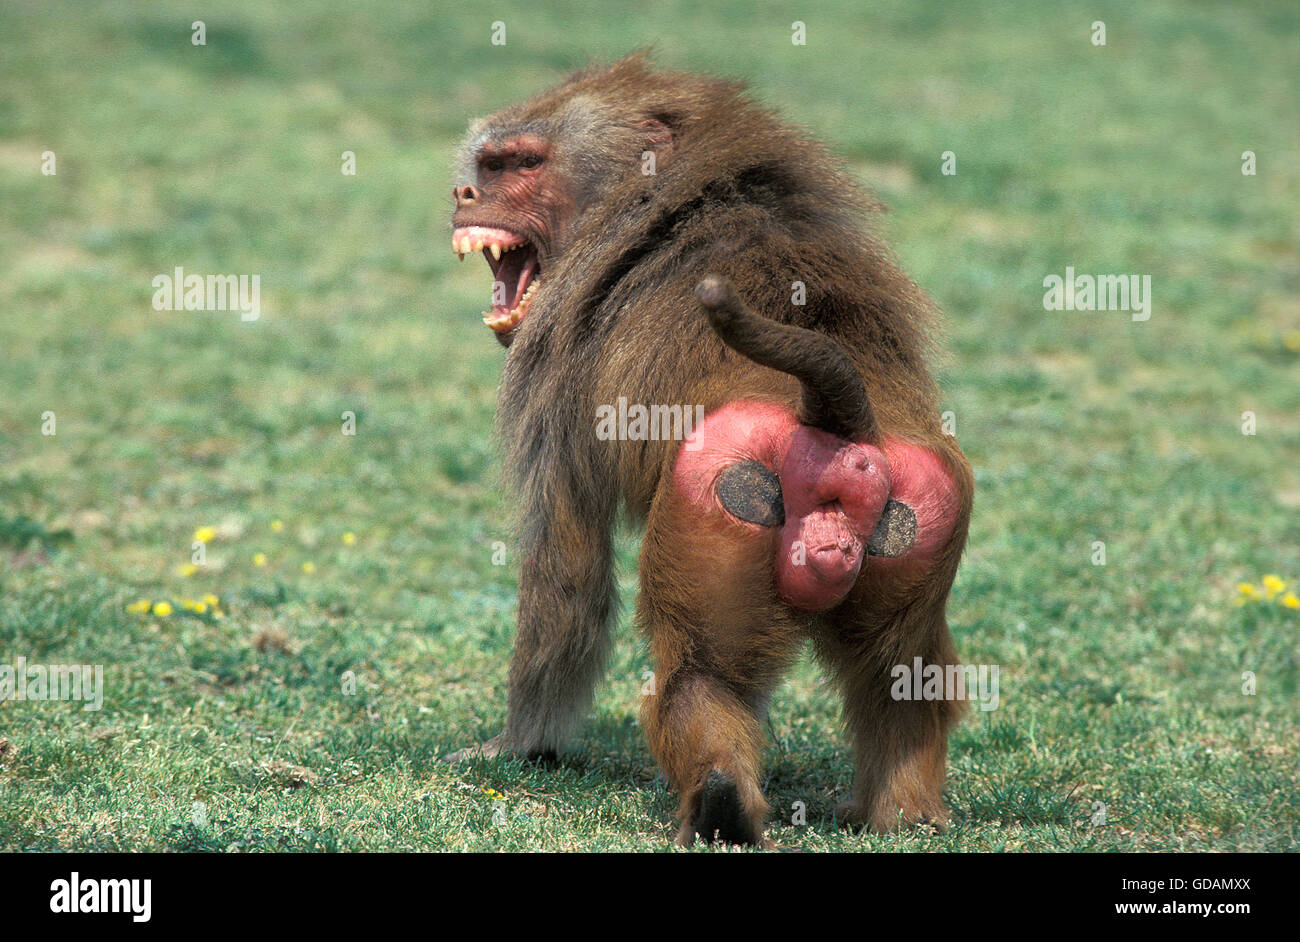 hamadryas-baboon-papio-hamadryas-male-threat-displaying-GDAMXX.jpg